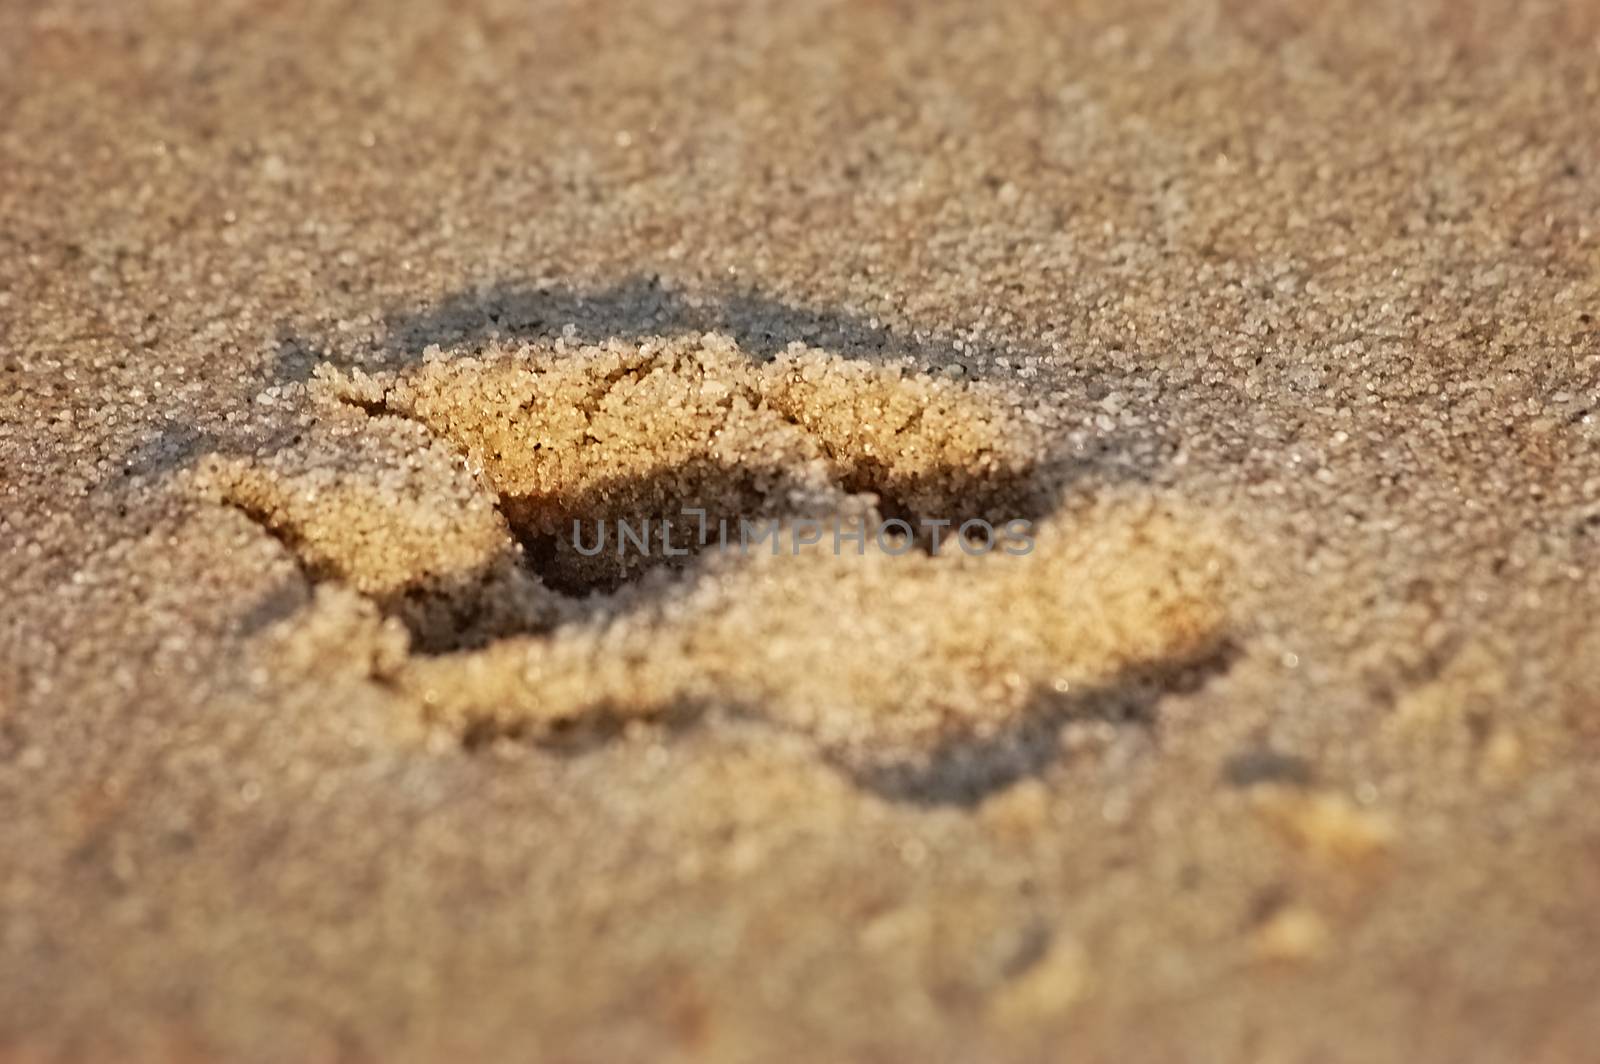 Paw print in sand by stockbp